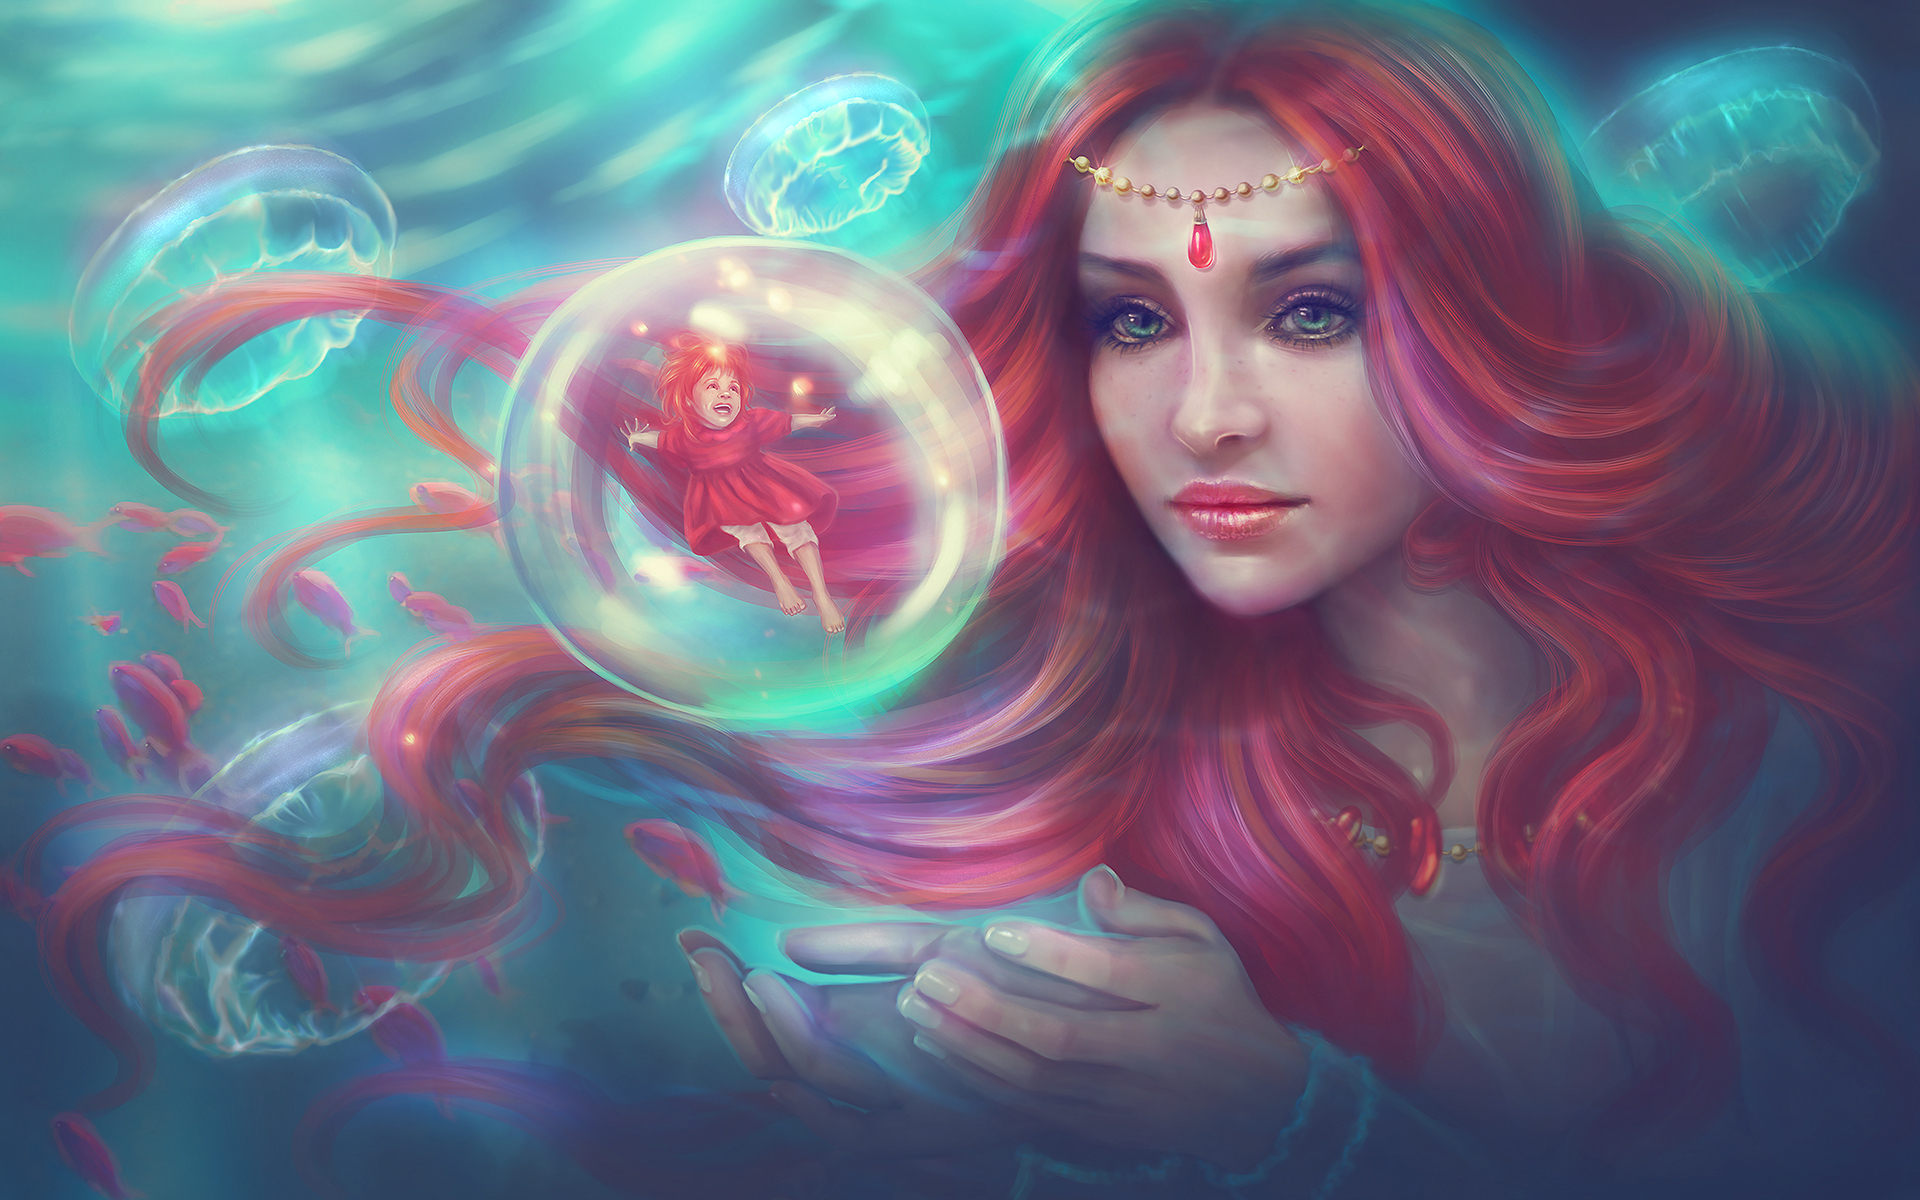 фэнтези русалка графика рисунок fantasy mermaid graphics figure без смс